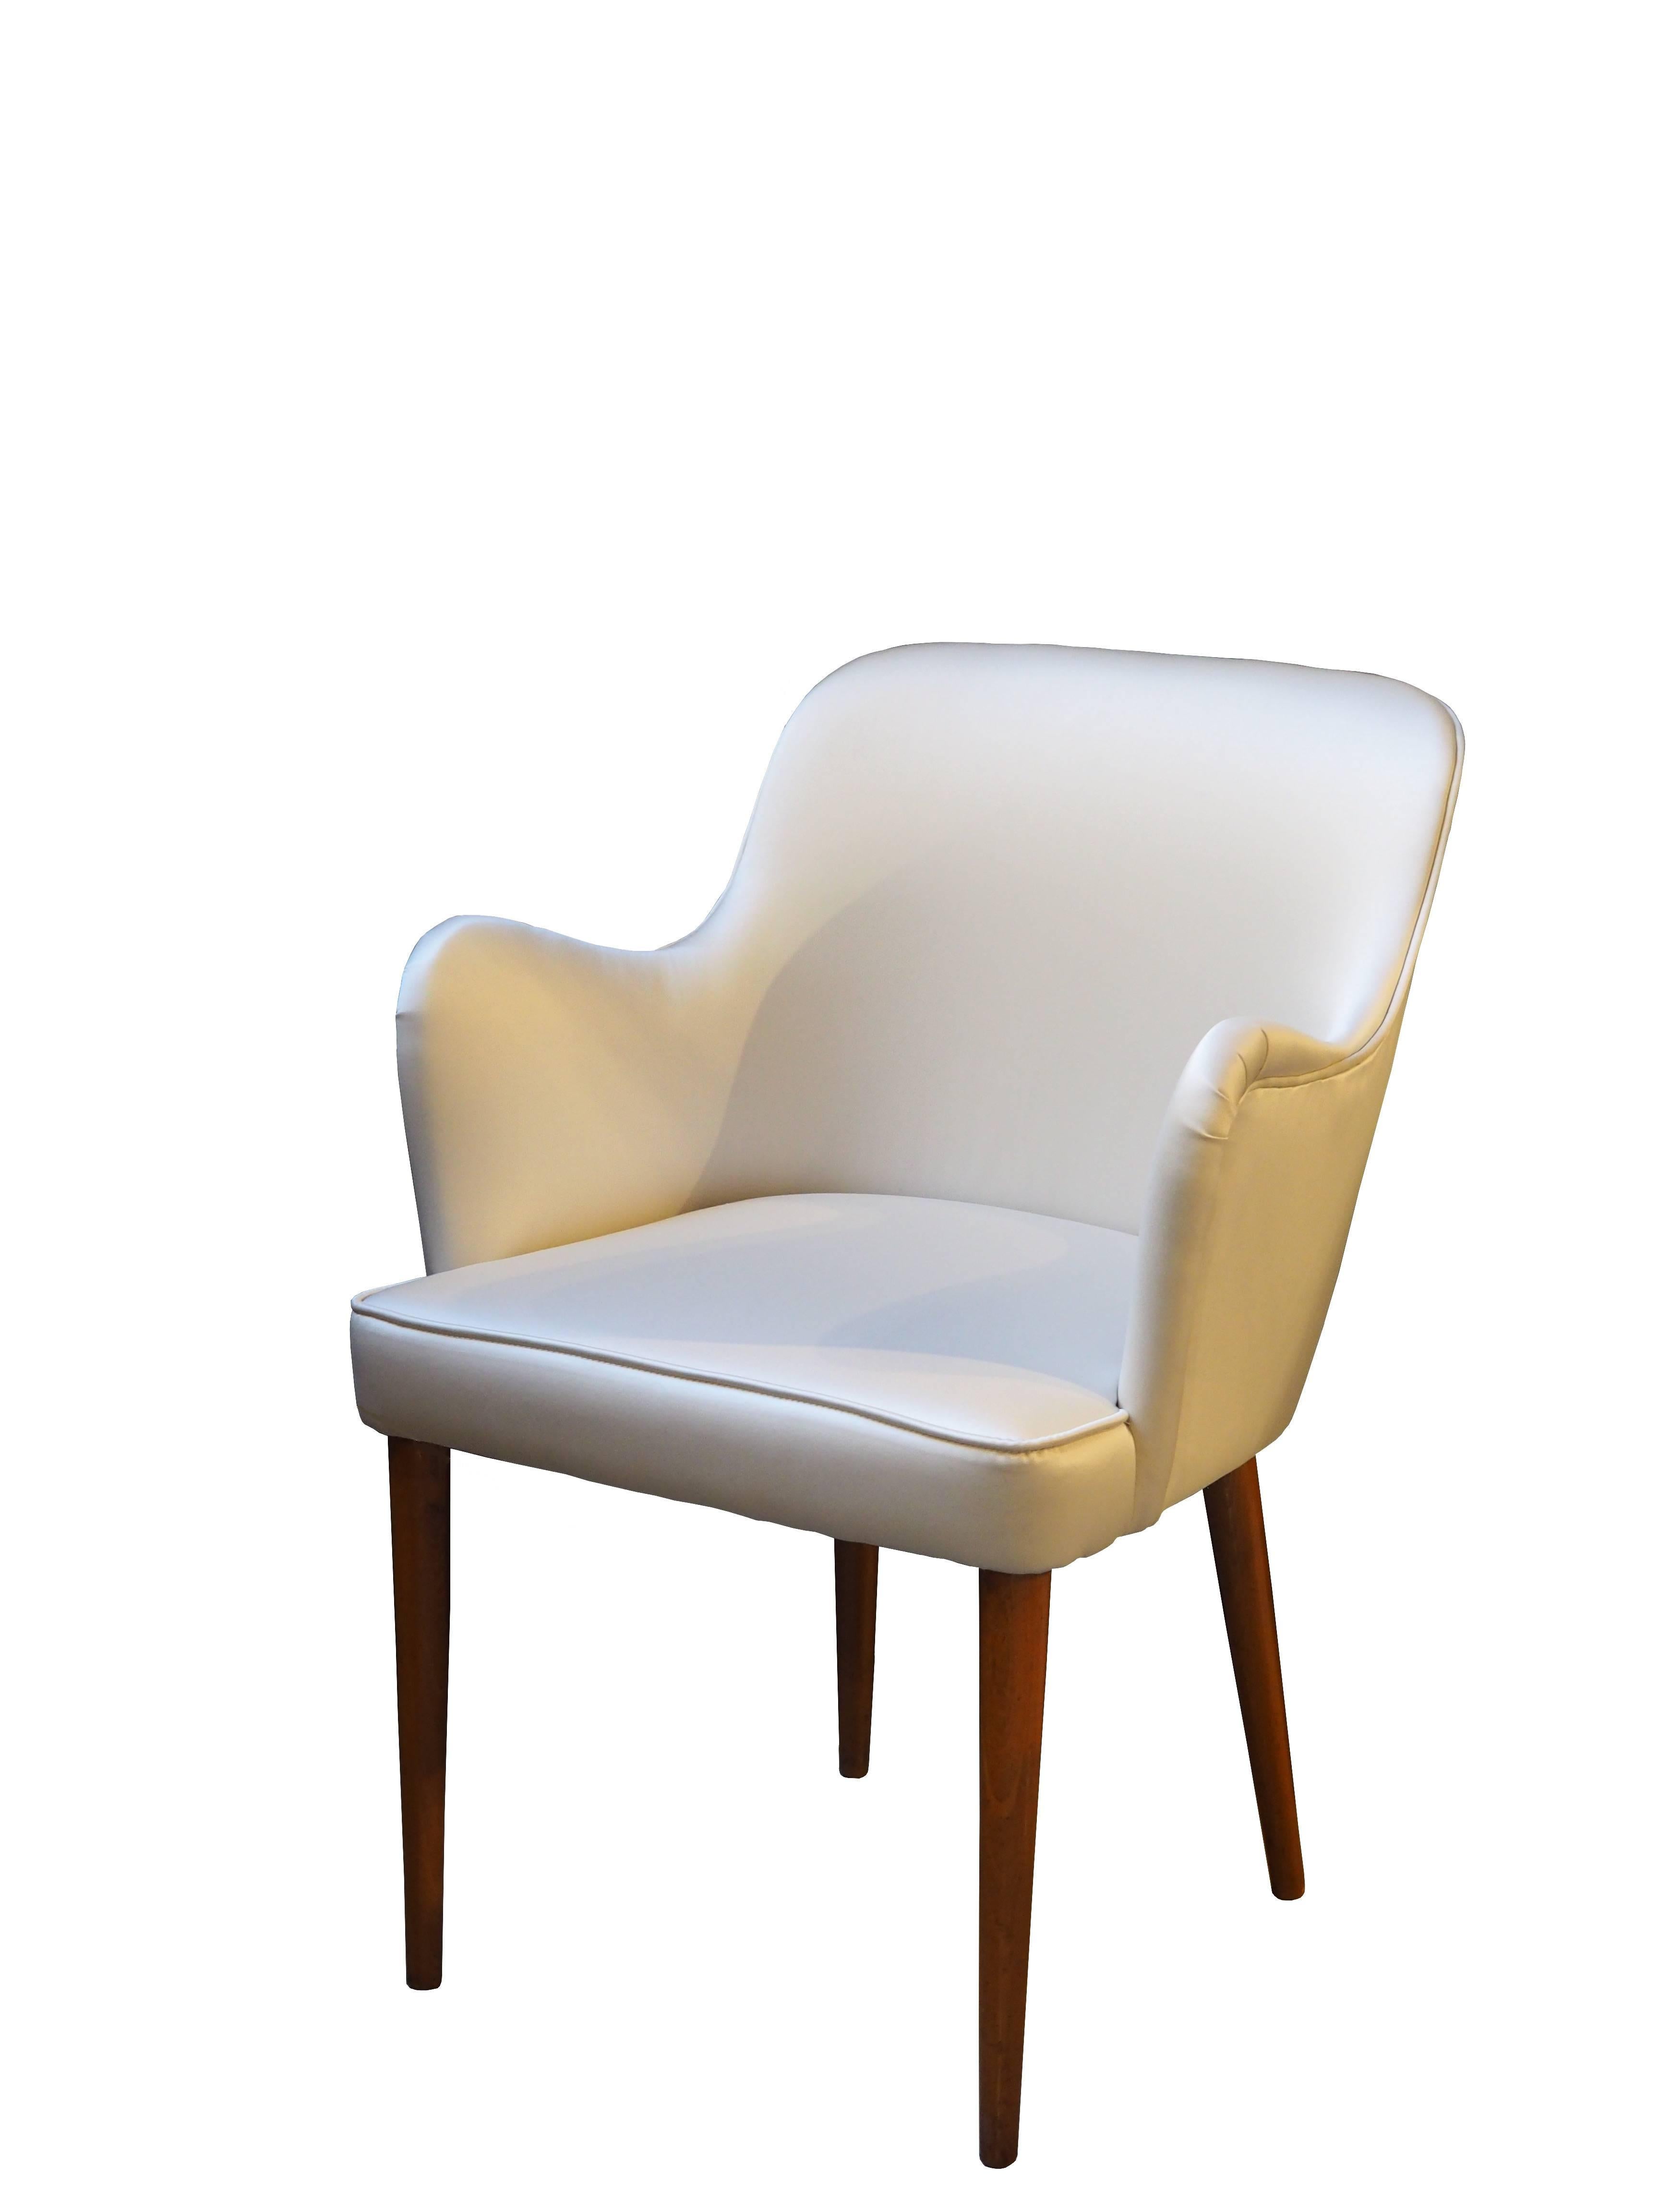 Set of two walnut armchairs, cream silk upholstered.
Designed by Osvaldo Borsani,
1950s.
Measures: H cm 80 x W cm 57 x D cm 57, seat height H cm 45.